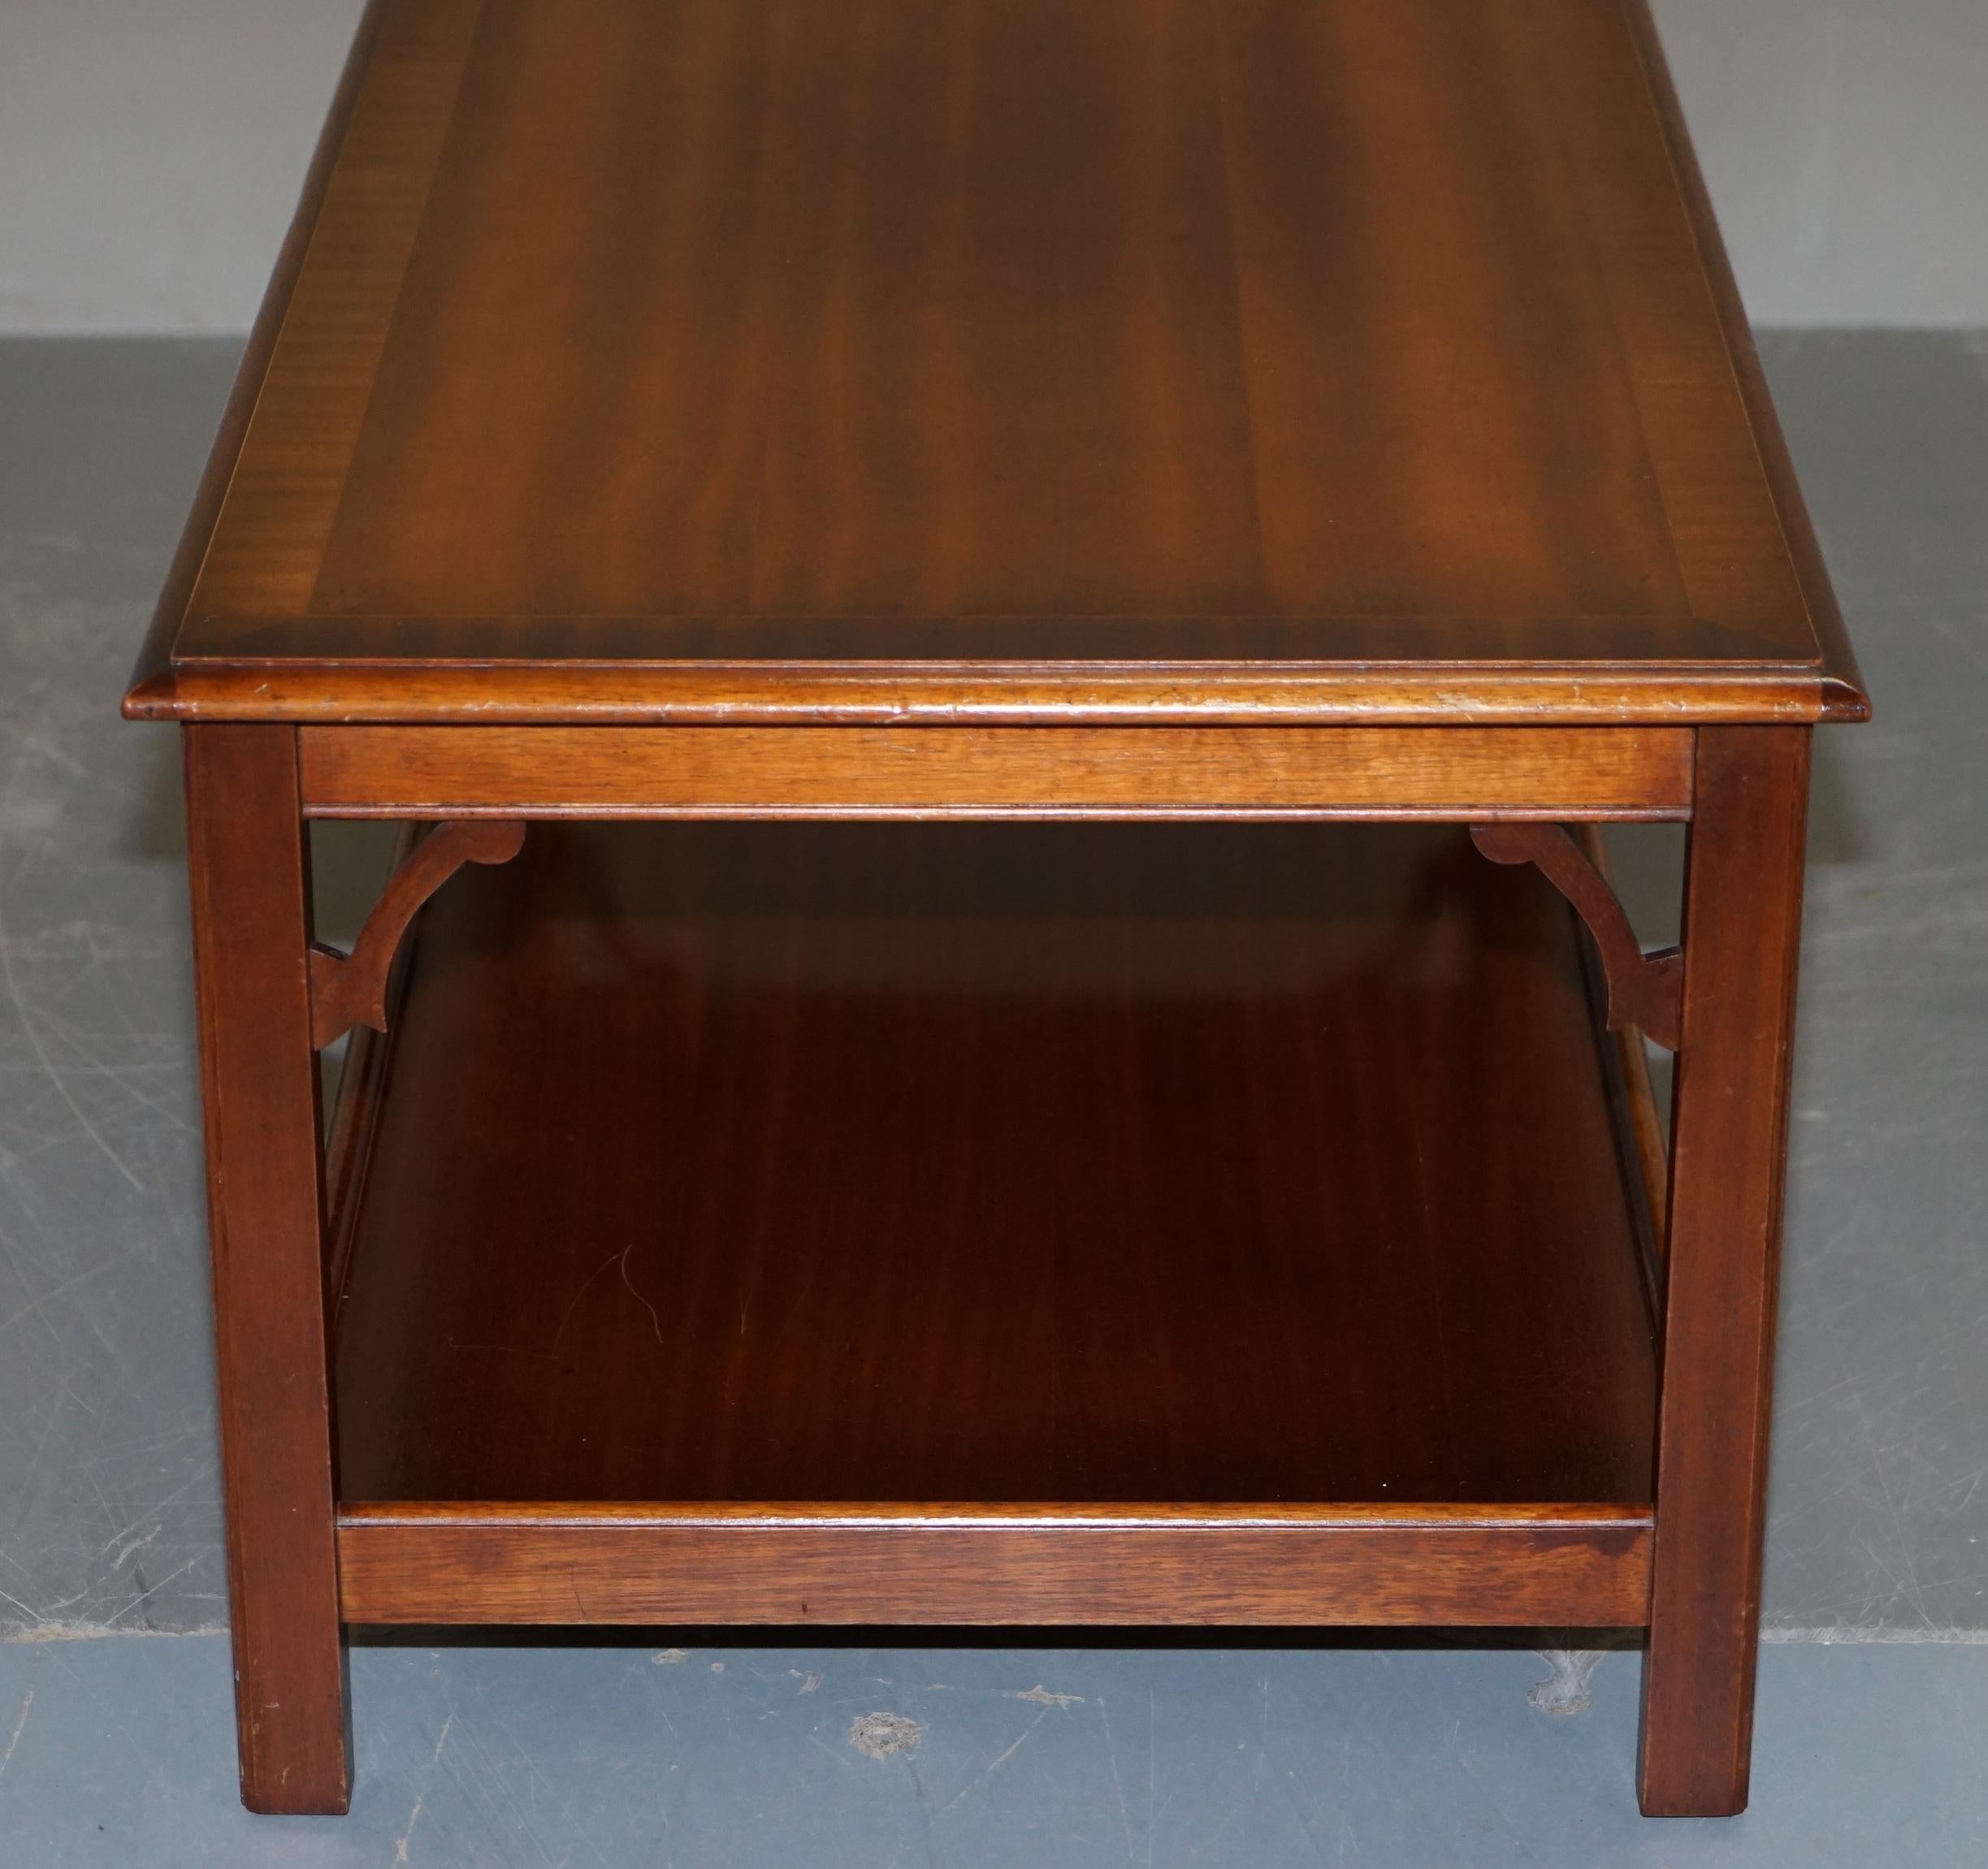 Lovely Vintage Flamed Hardwood Bradley Furniture Long Coffee Table Nice Design 5